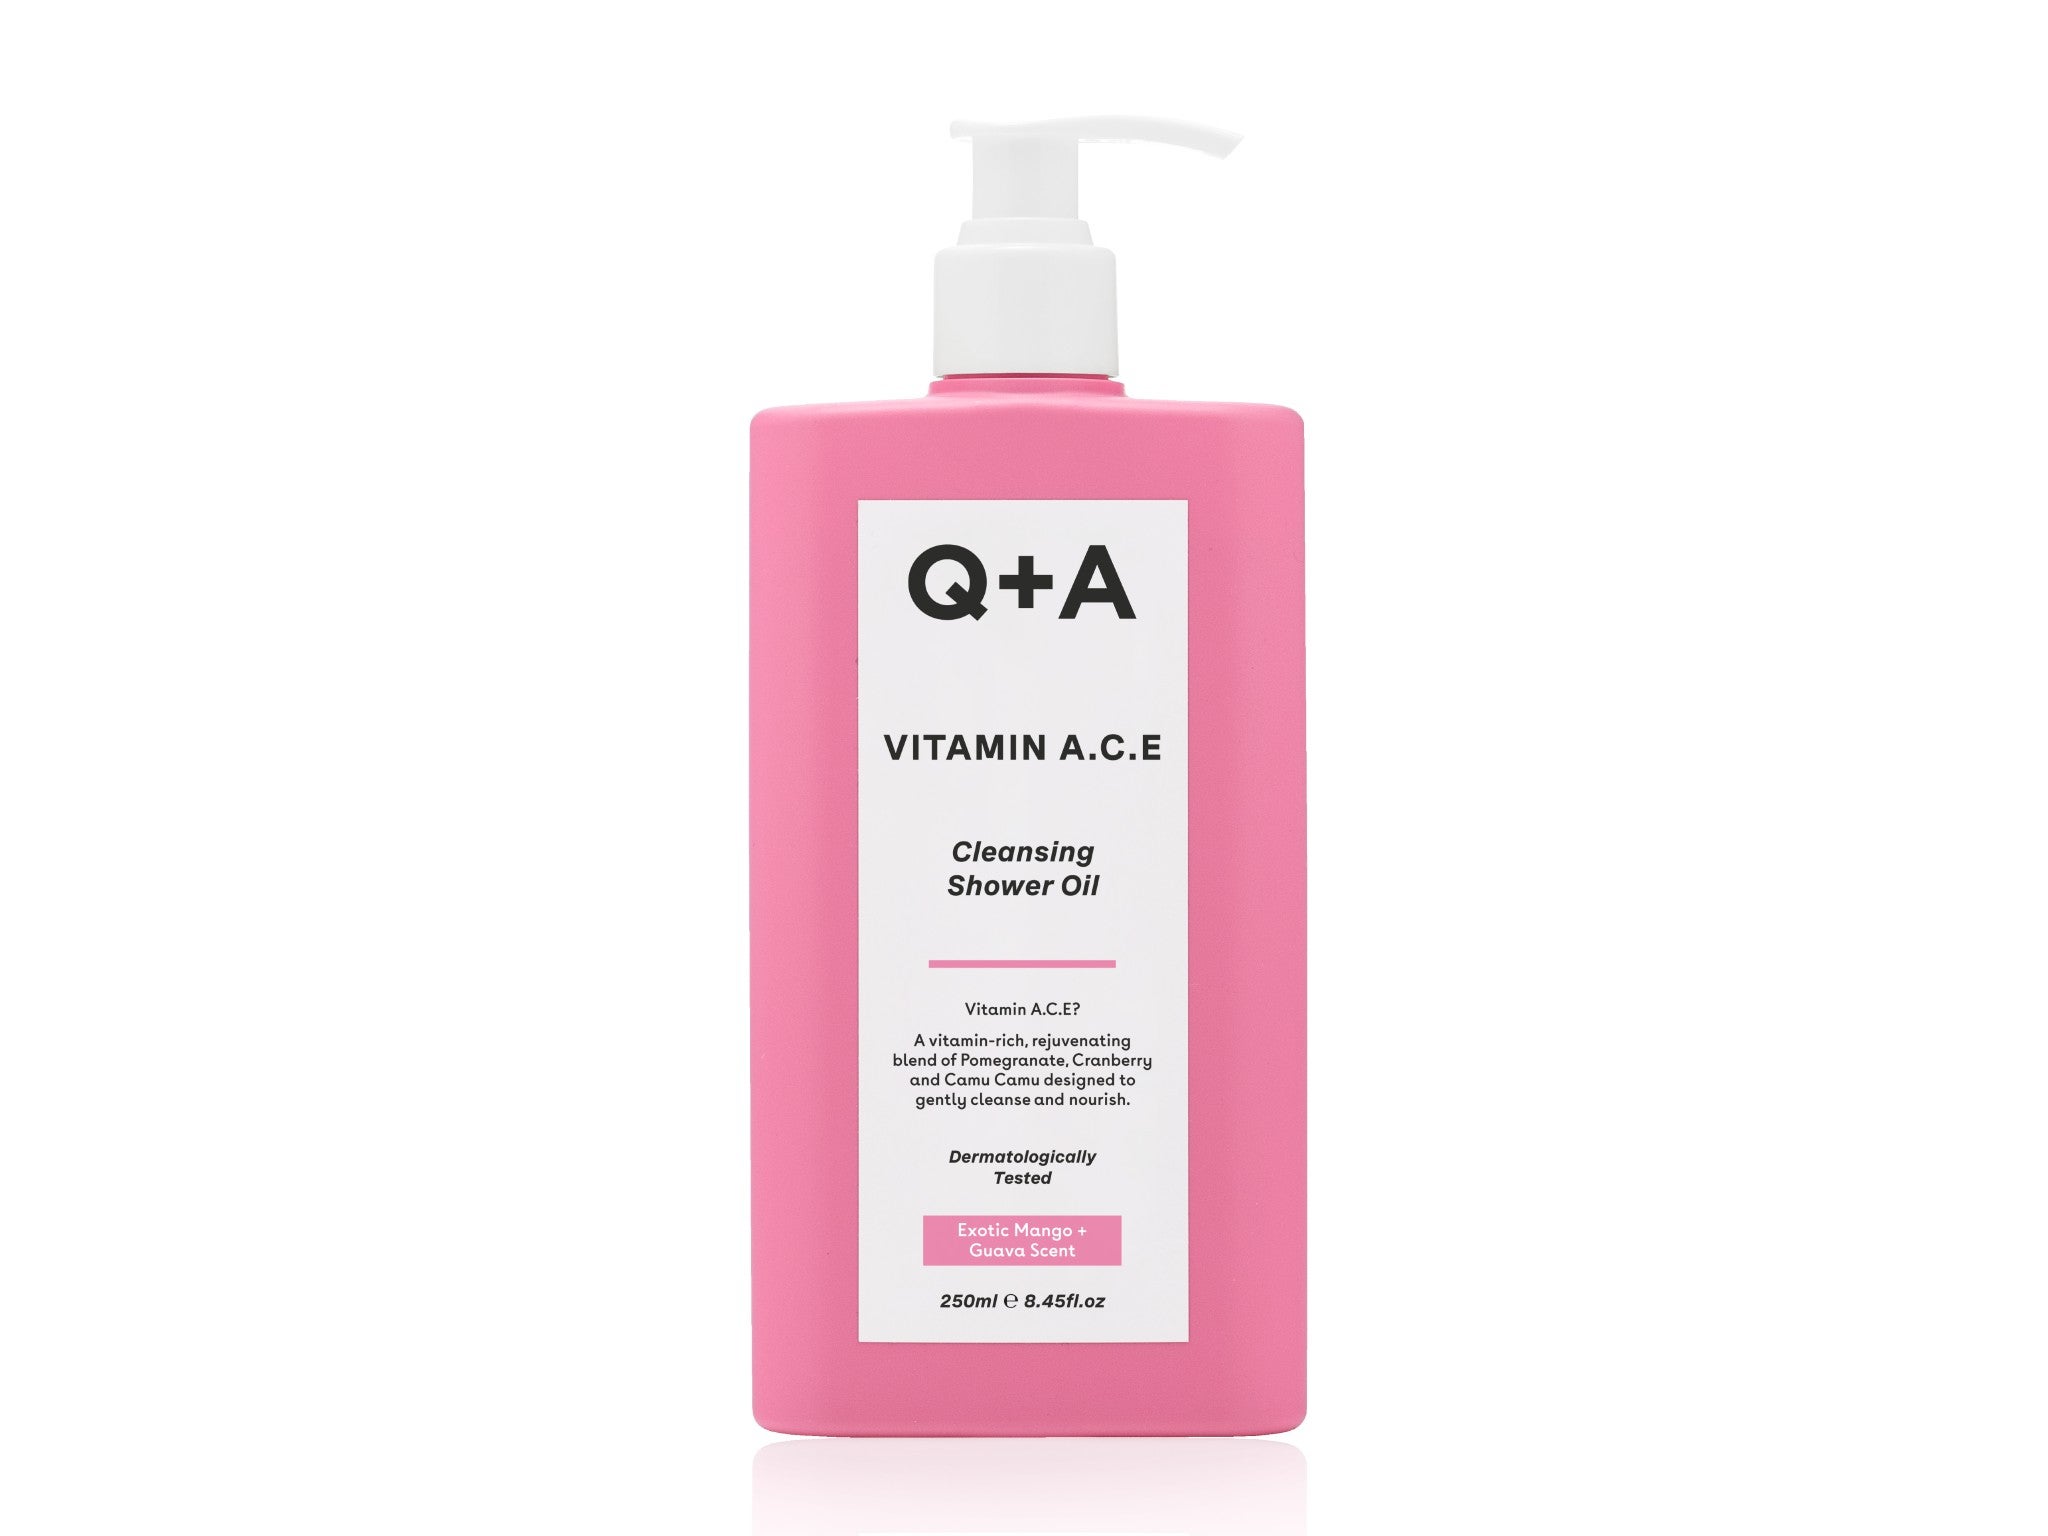 Q+A shower oil